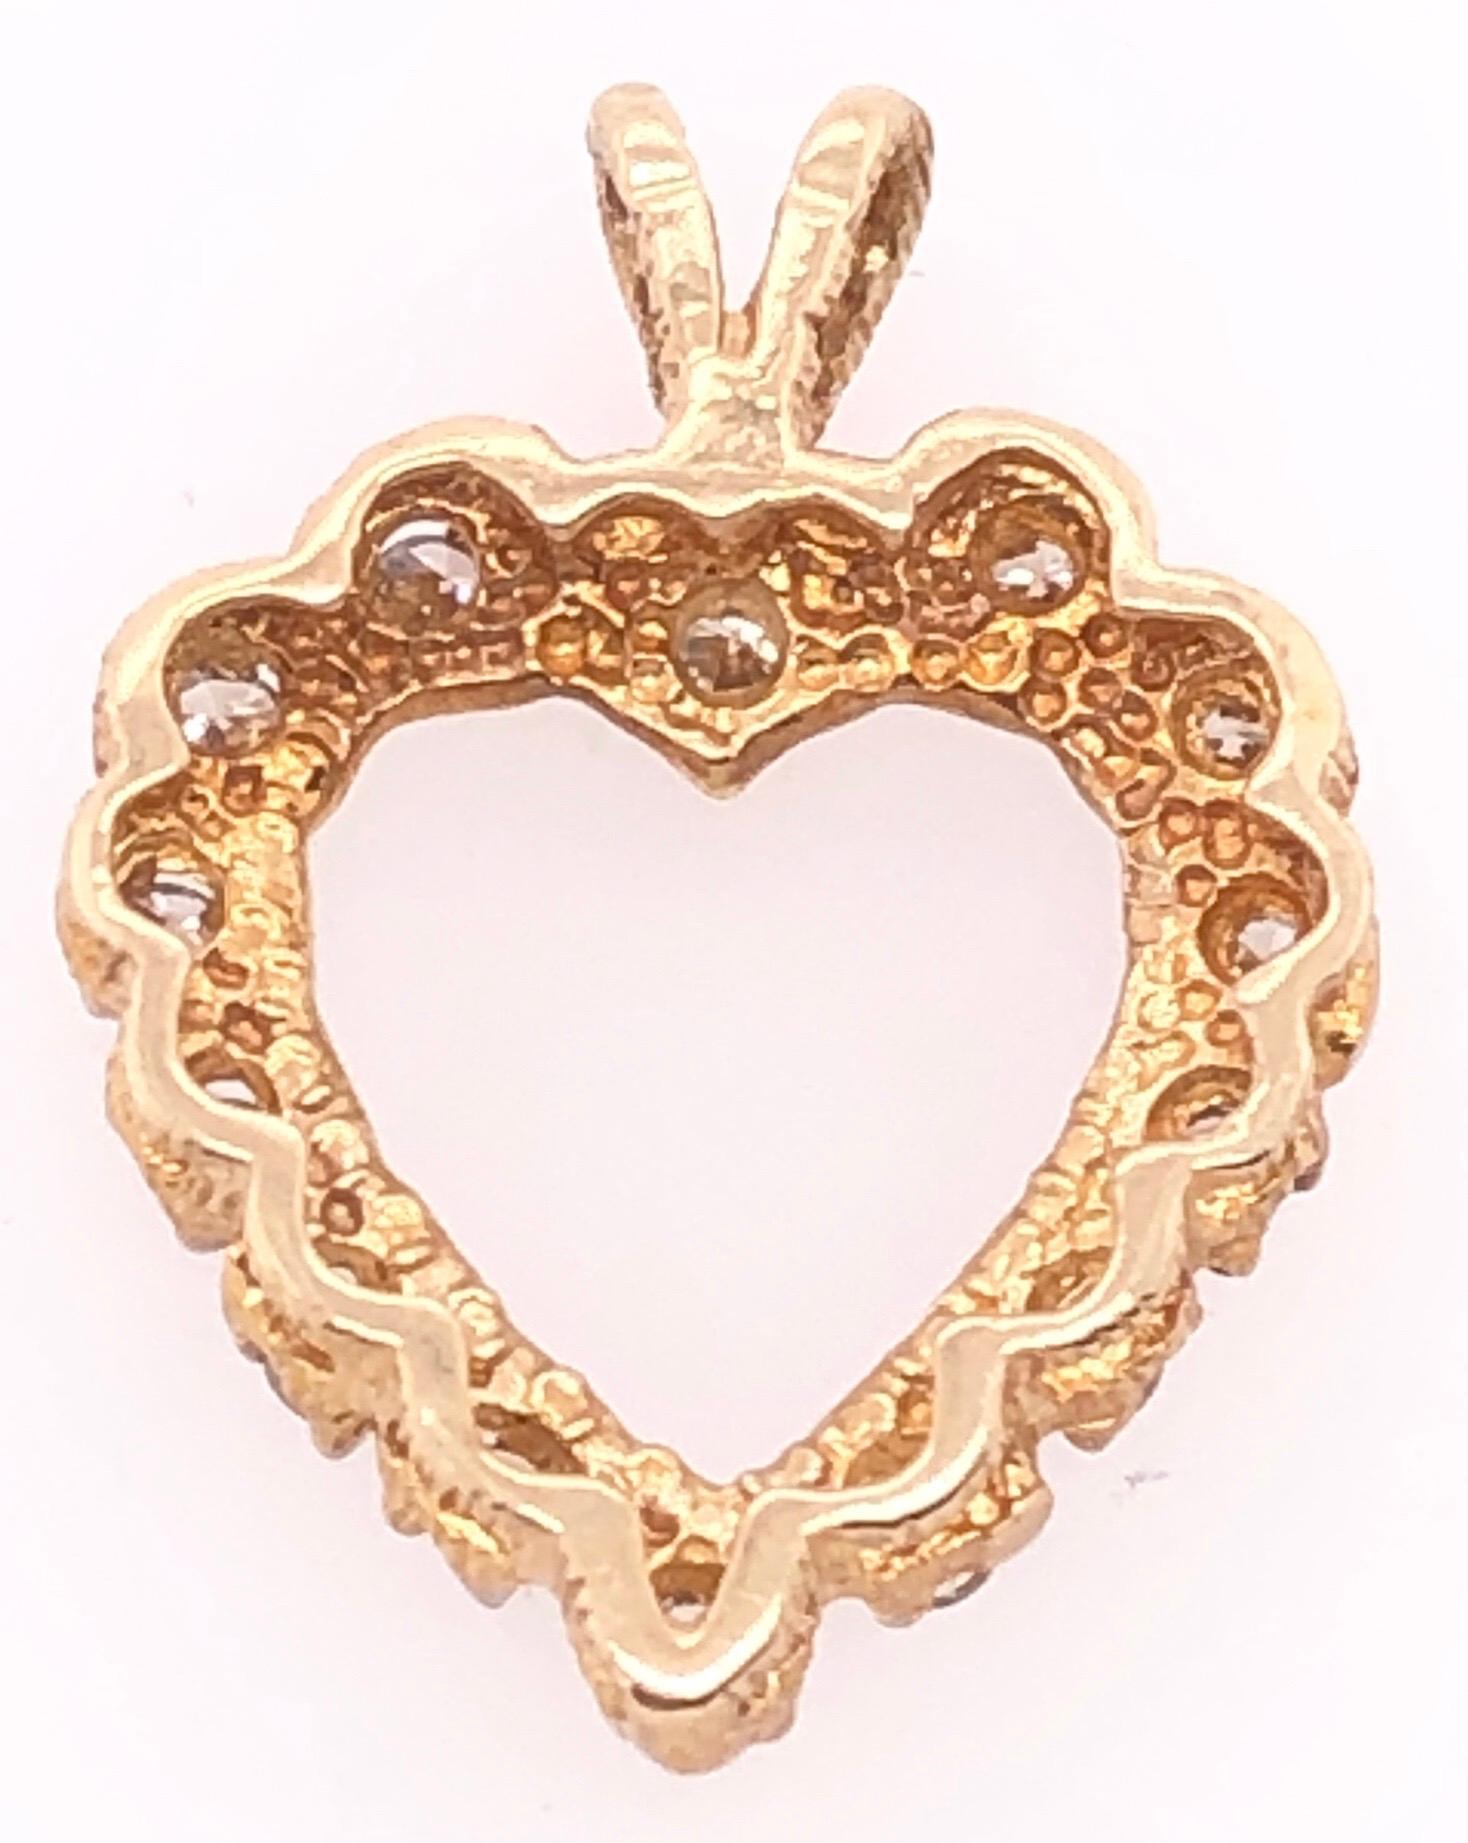 14 Karat Yellow Gold Heart Pendant with Round Diamonds 
0.50 Total Diamond Weight.
2.08 grams total weight.